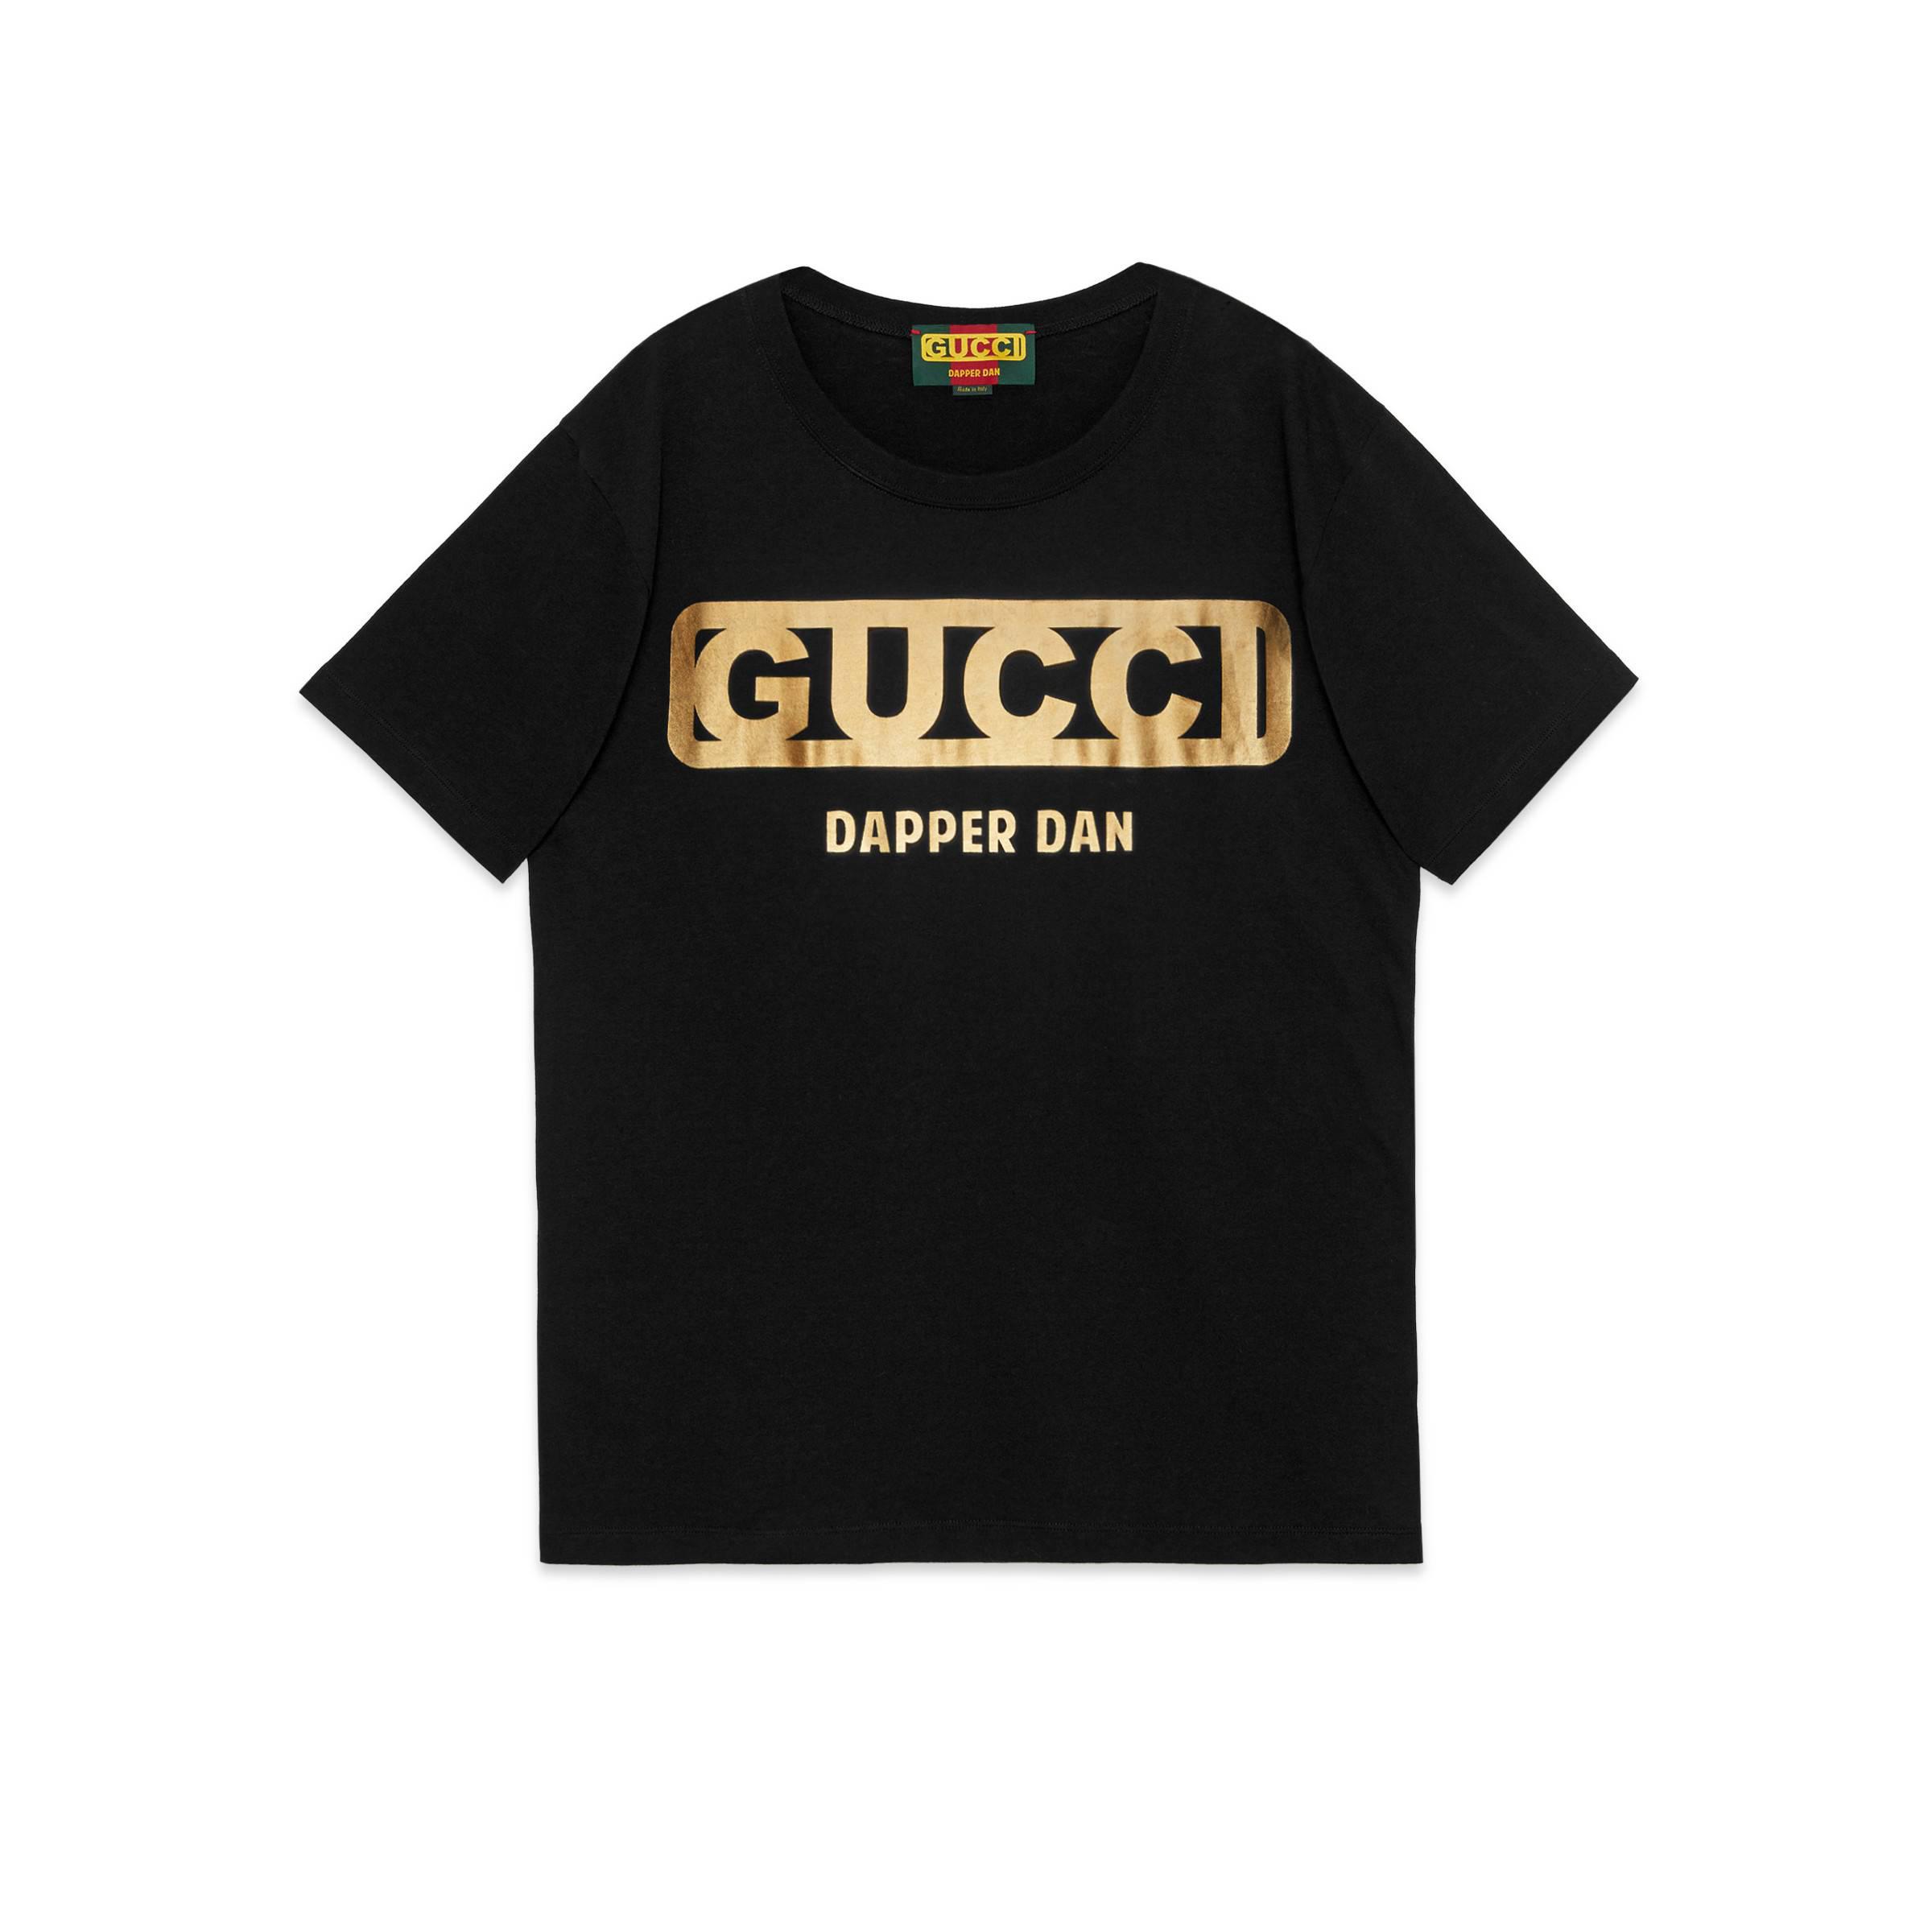 Gucci Oversize -dapper Dan T-shirt in Black for Men - Lyst